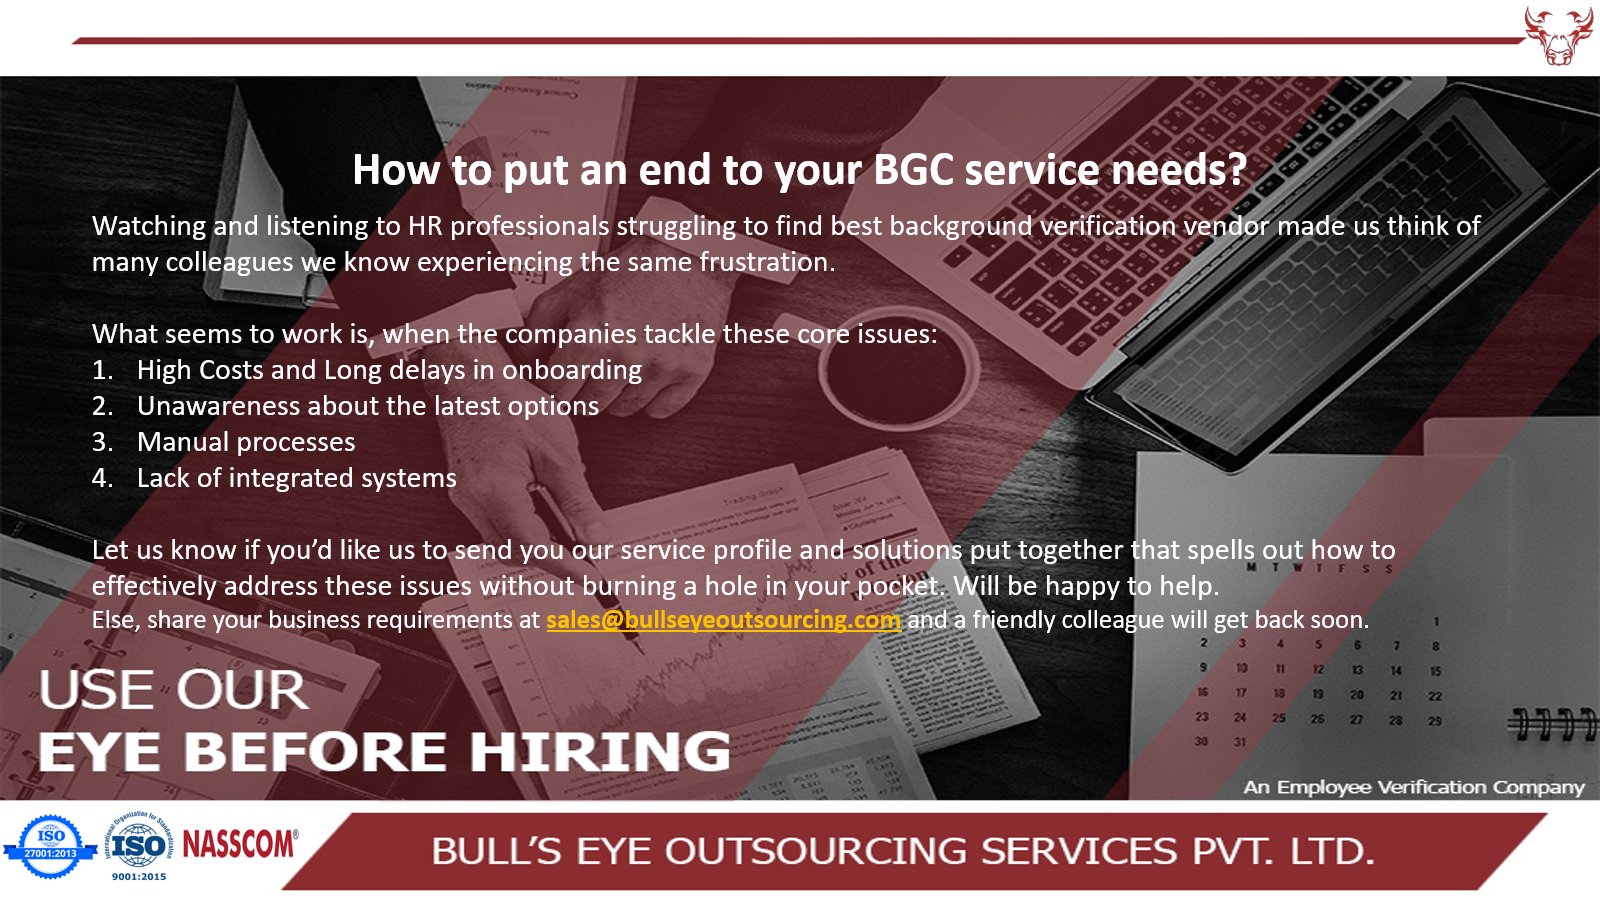 Bull's Eye Outsourcing Services Pvt. Ltd. (@BullPvt) / Twitter